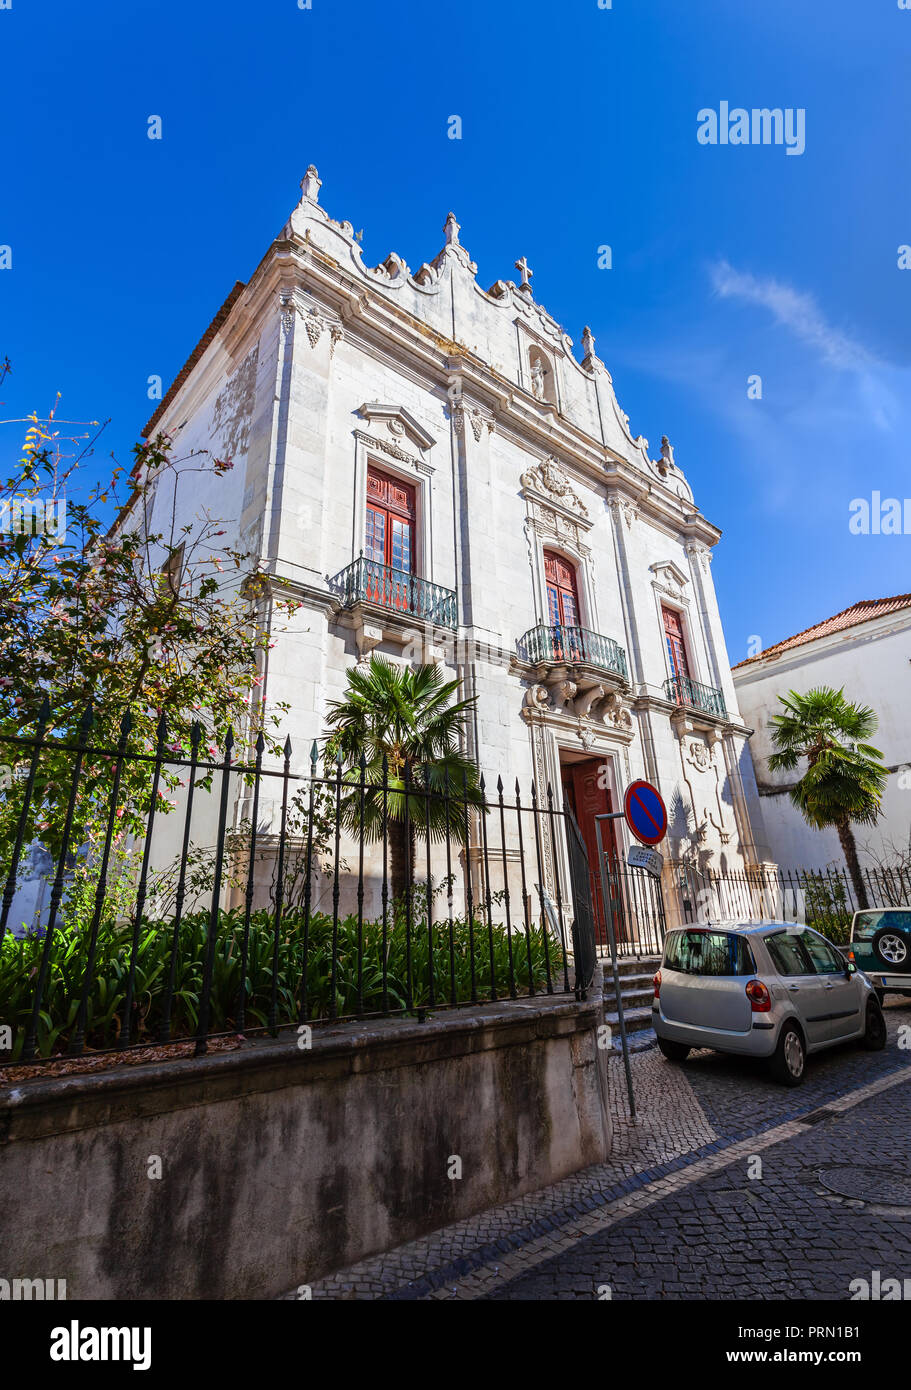 Santarem, Portugal. Igreja da Misericordia church. 16th century Hall-Church in late Renaissance Architecture with a baroque facade Stock Photo